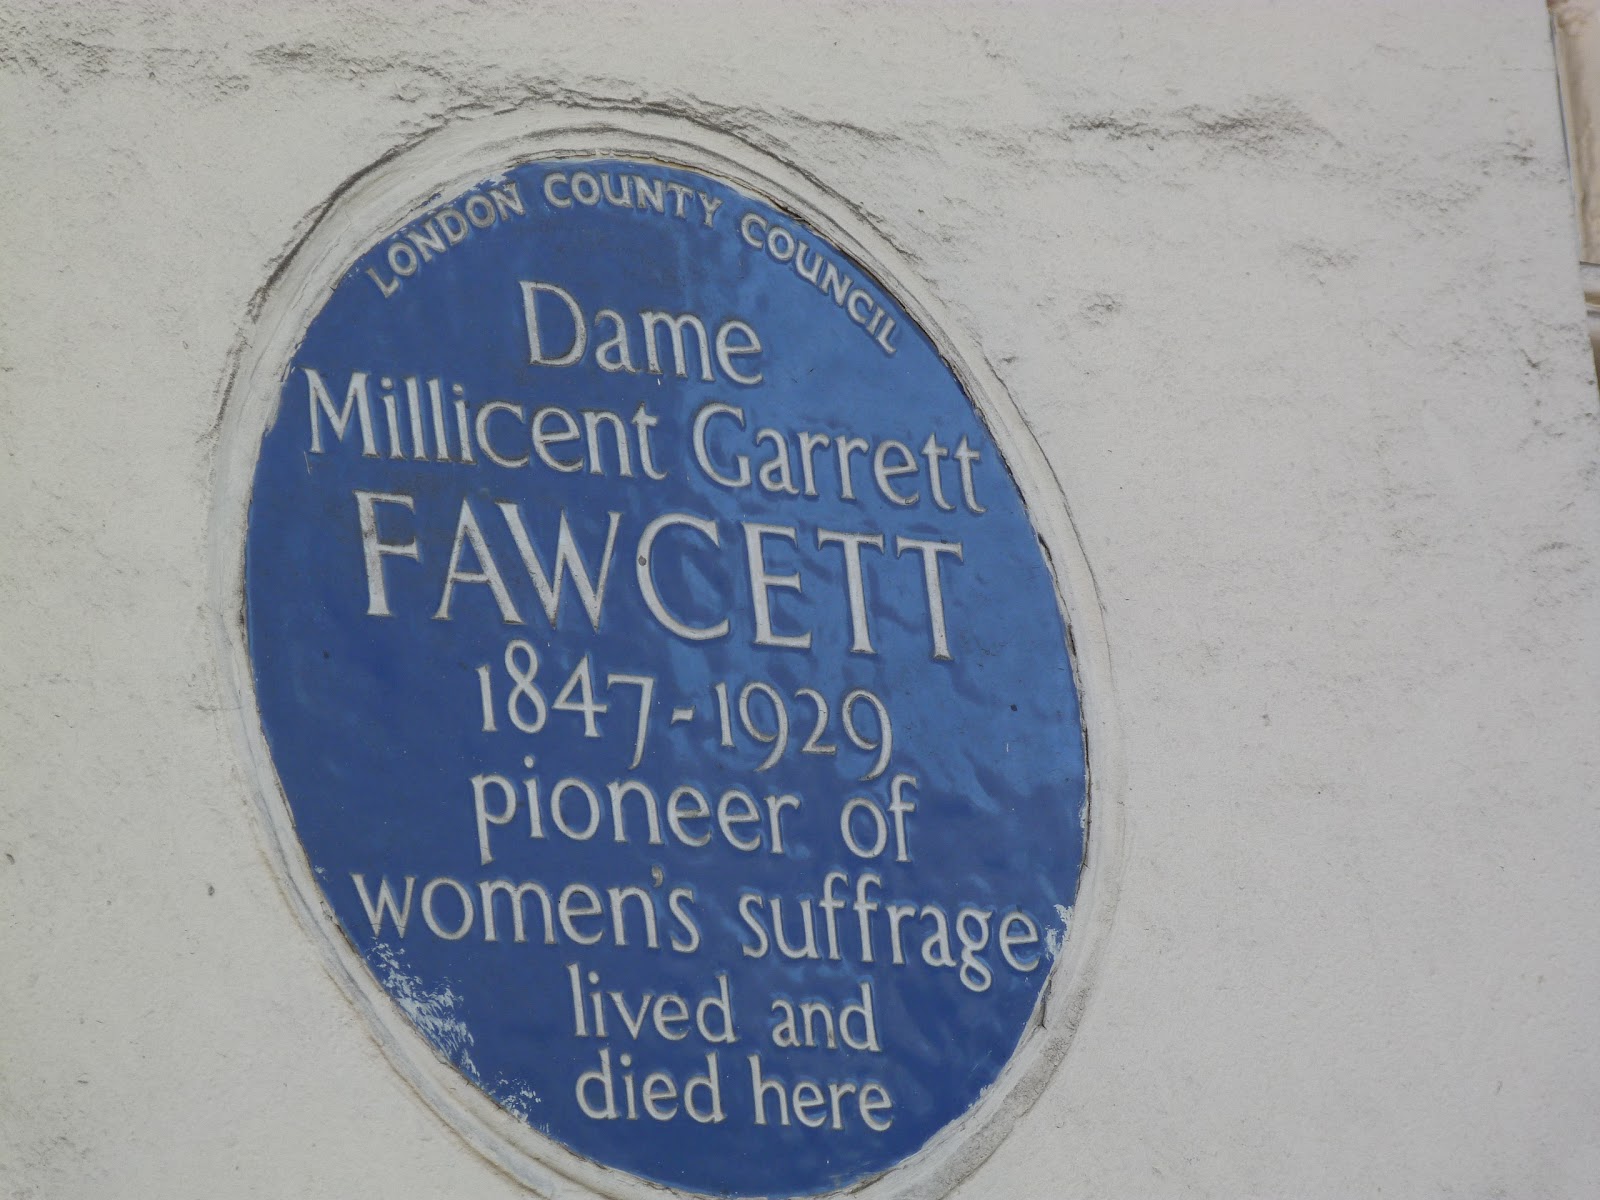 Sign showing where Dame Millicent Garrett suffragette lived.